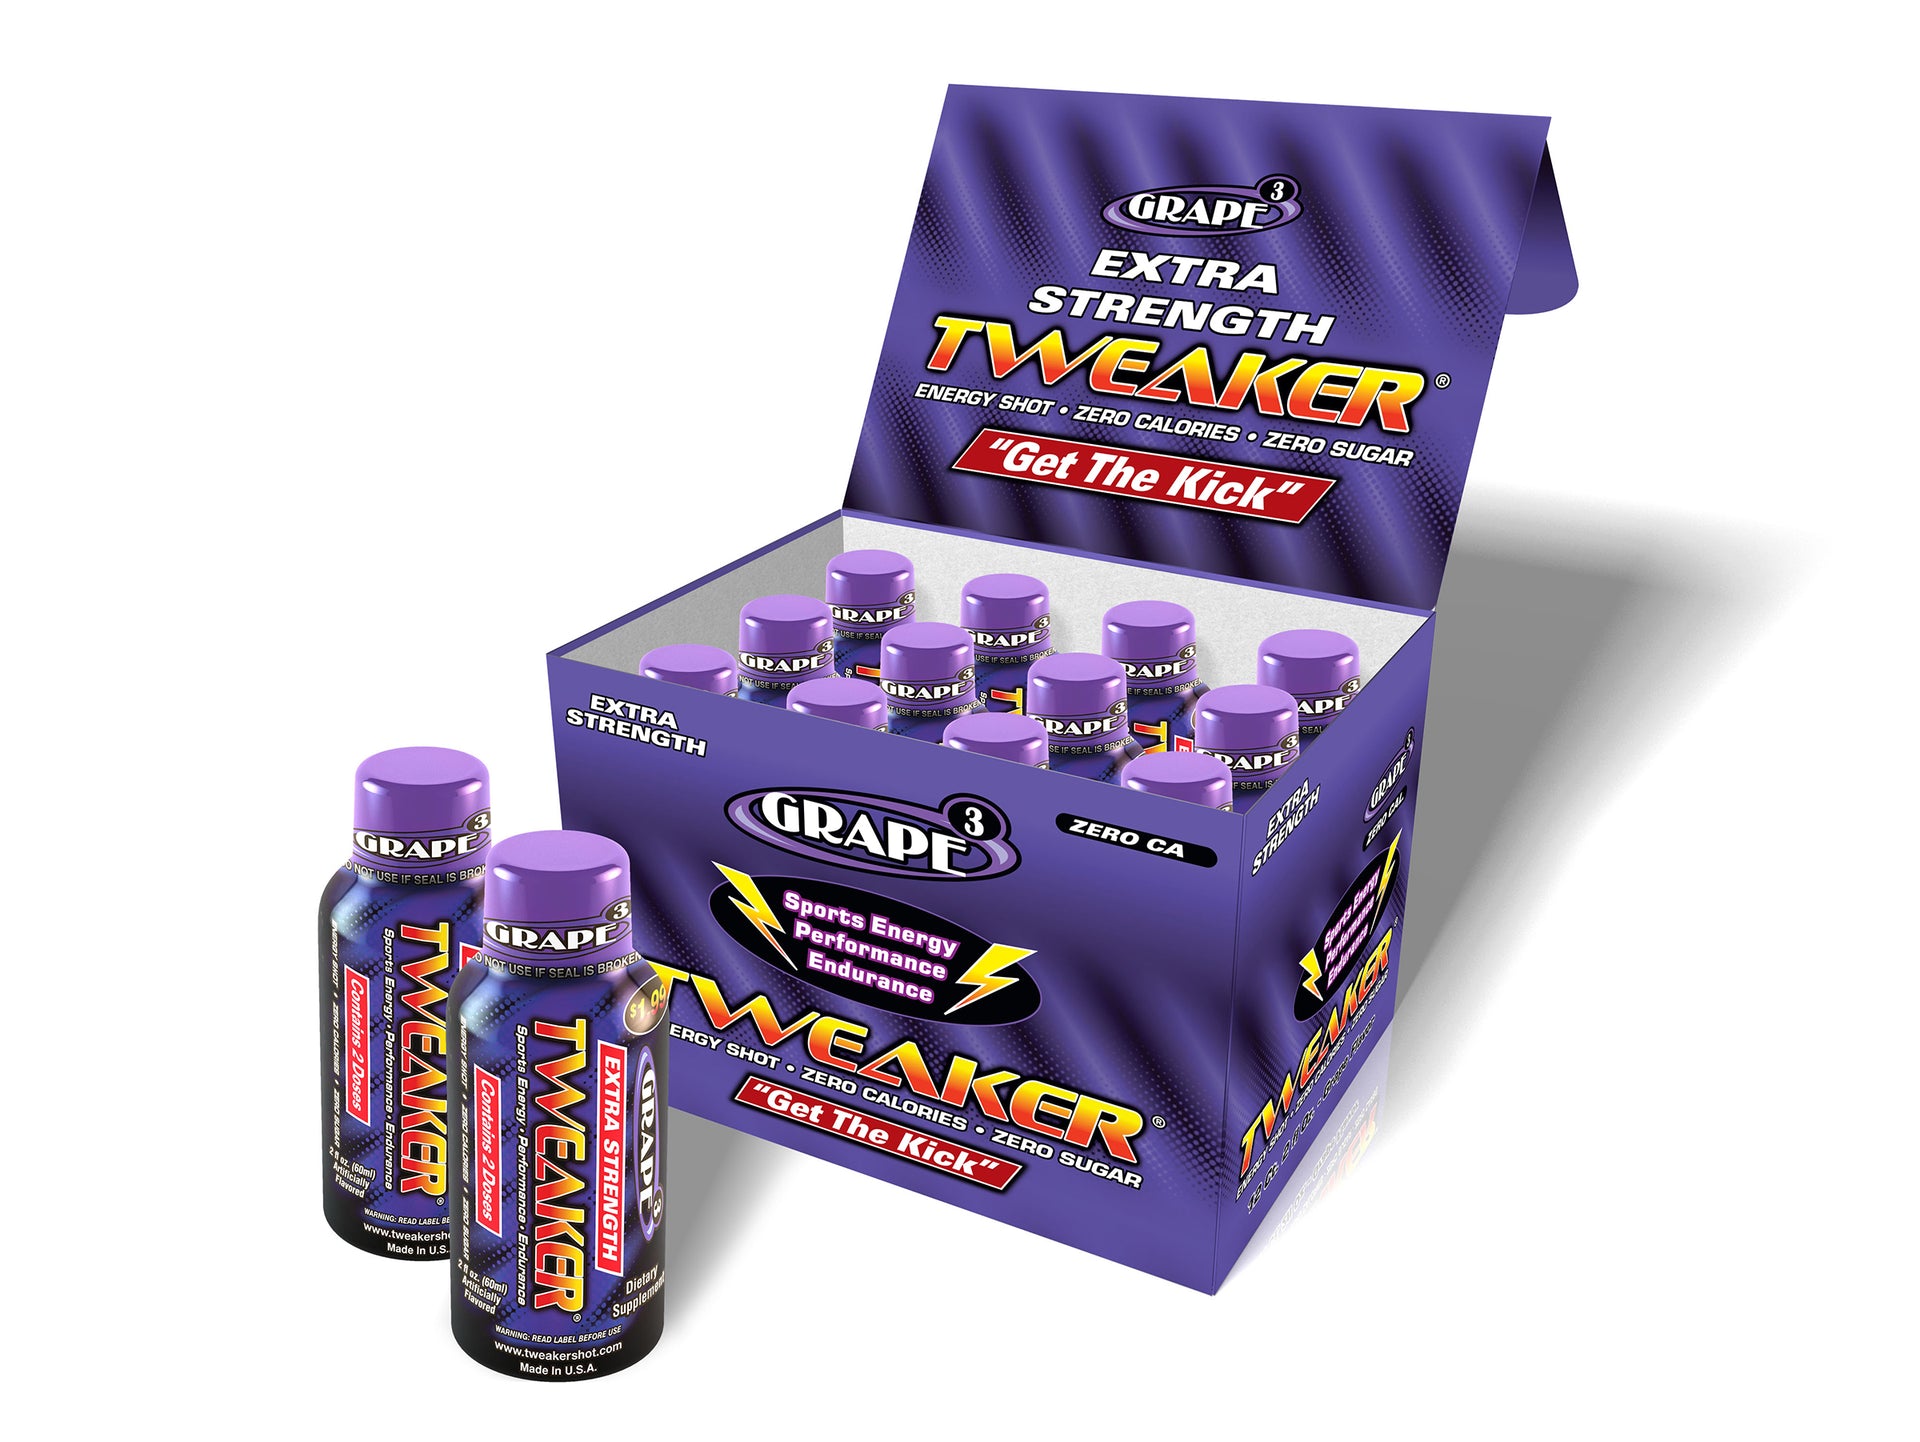 TWEAKER ENERGY SHOT - EXTRA STRENGTH 12 CT - Grape